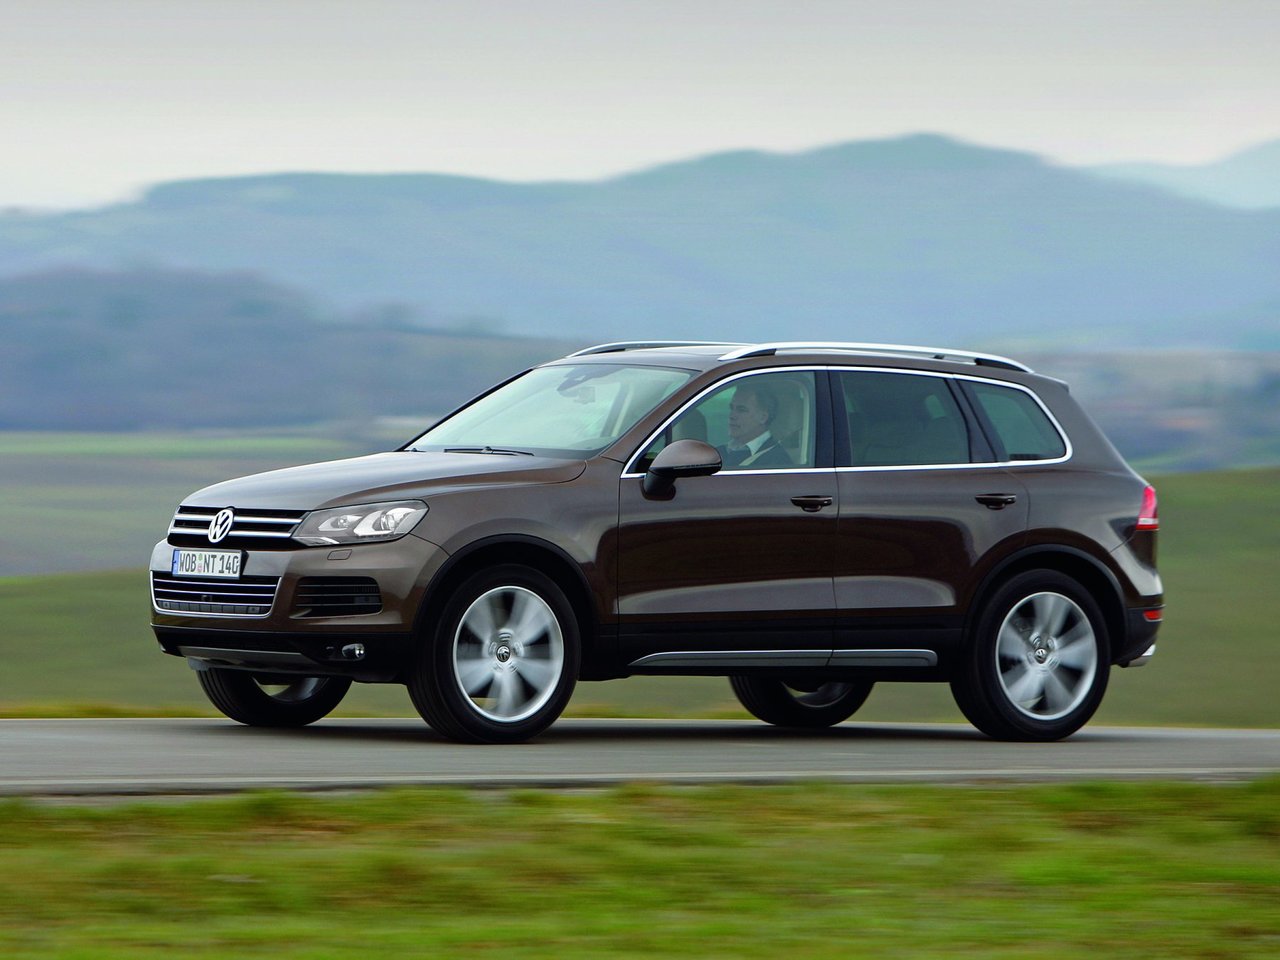 Volkswagen Touareg 2002-2010 - характеристики цена фотографии обзор